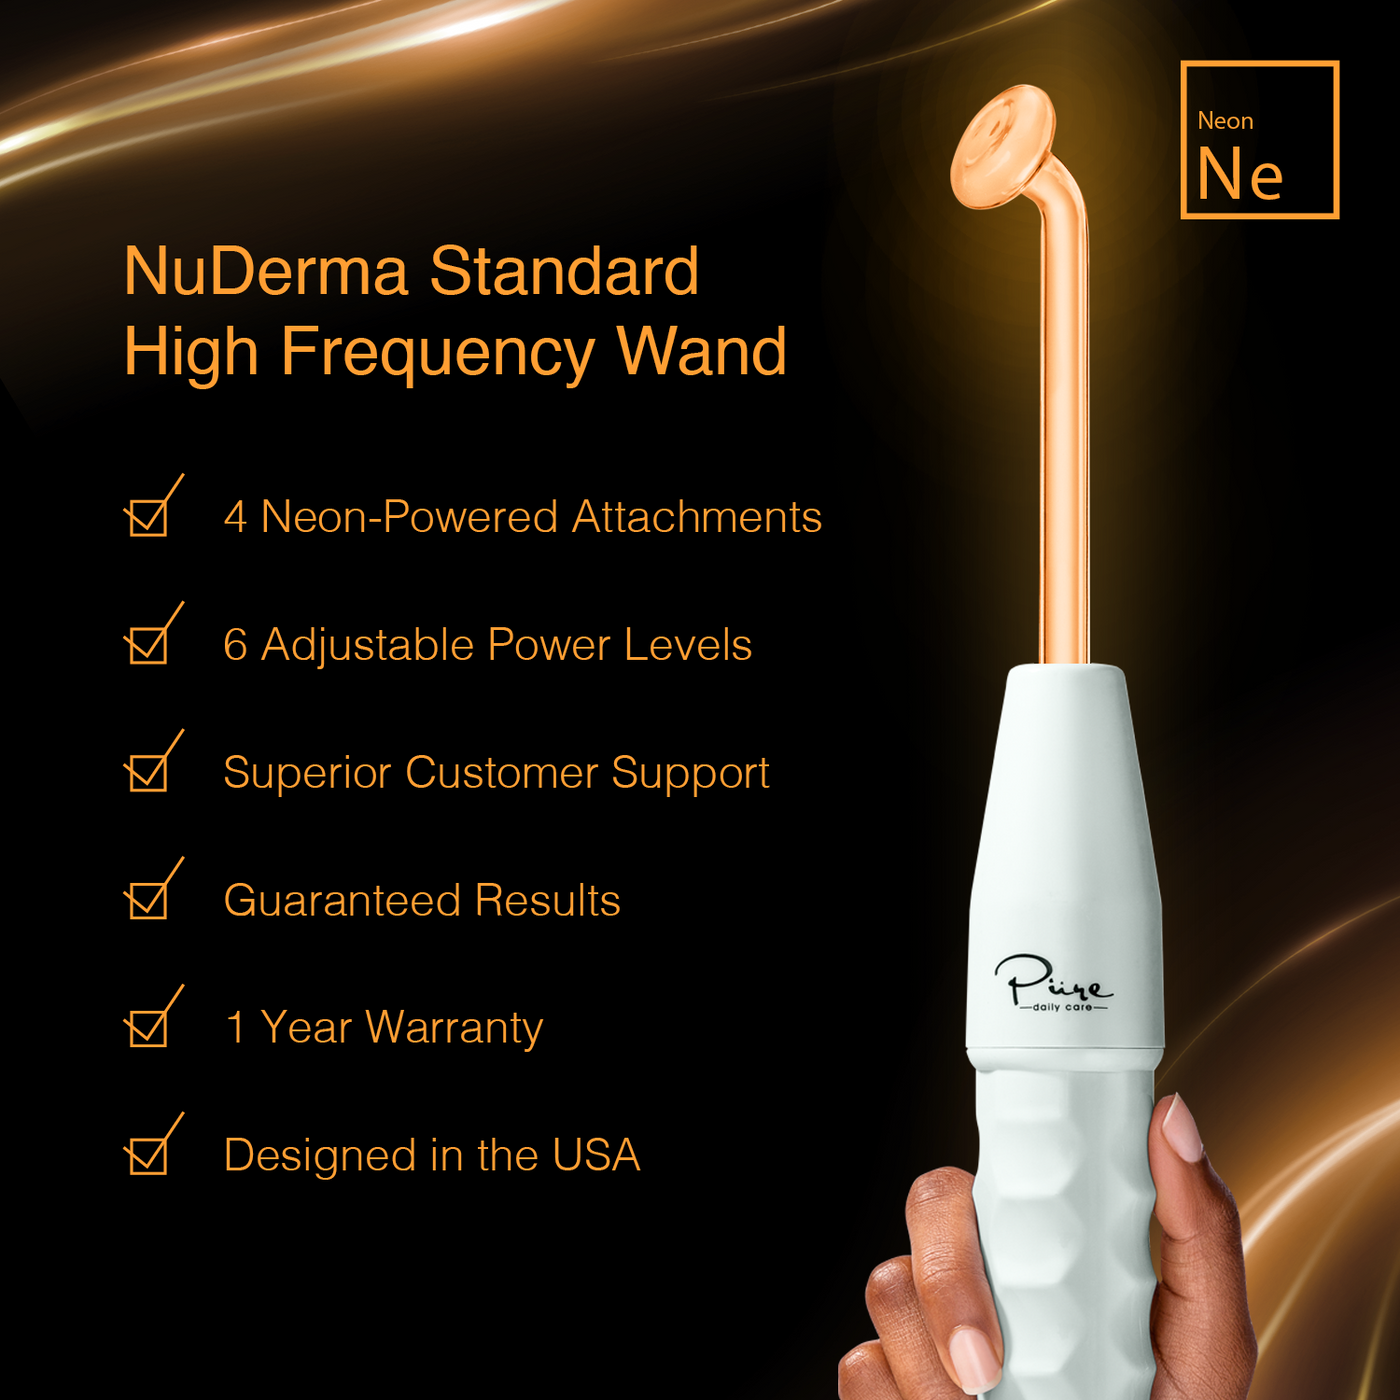 NuDerma Standard High Frequency